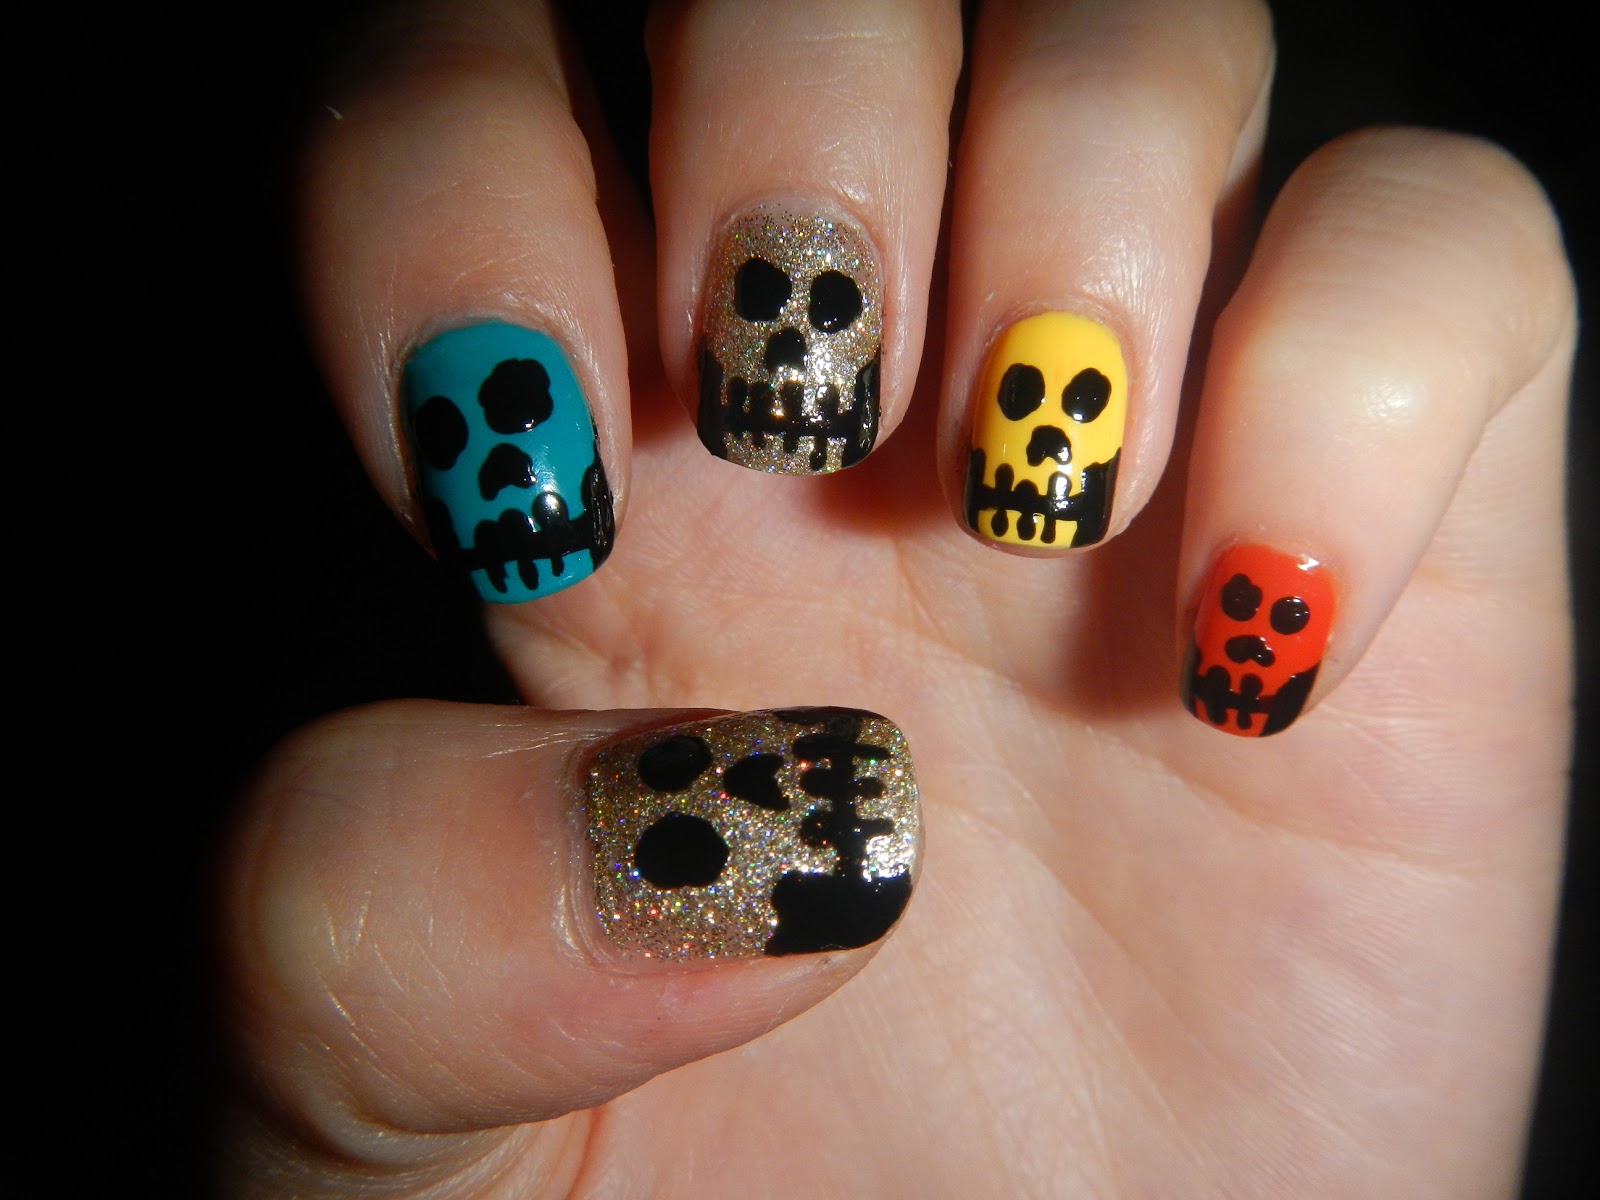 7. "Halloween Skull Nails" - wide 5